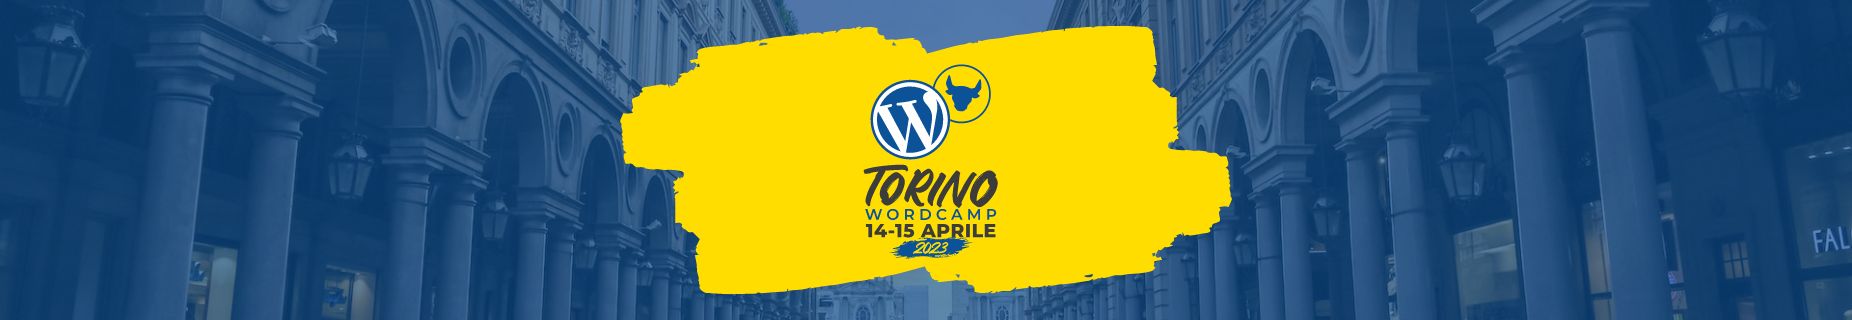 WordCamp Torino